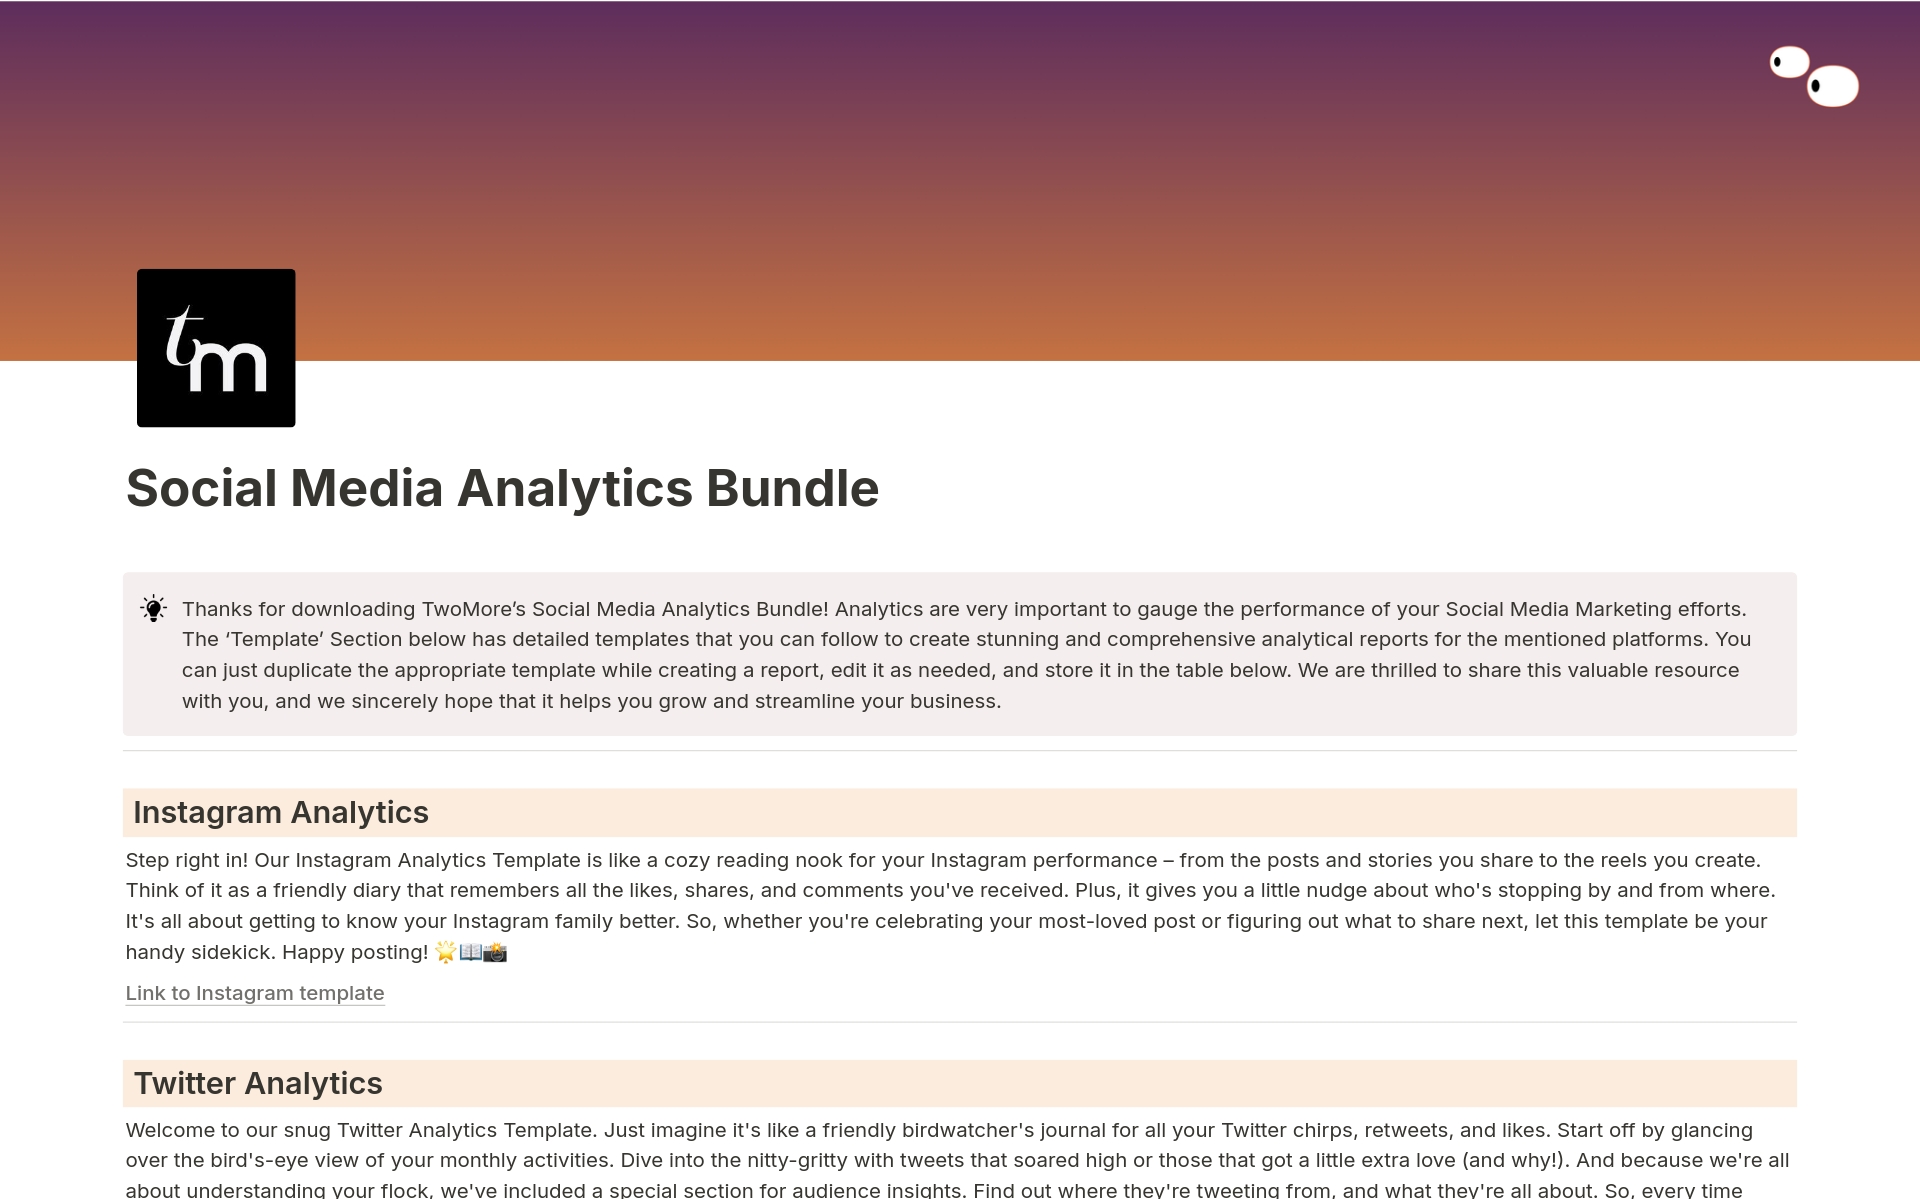 Vista previa de una plantilla para Social Media Analytics Kit